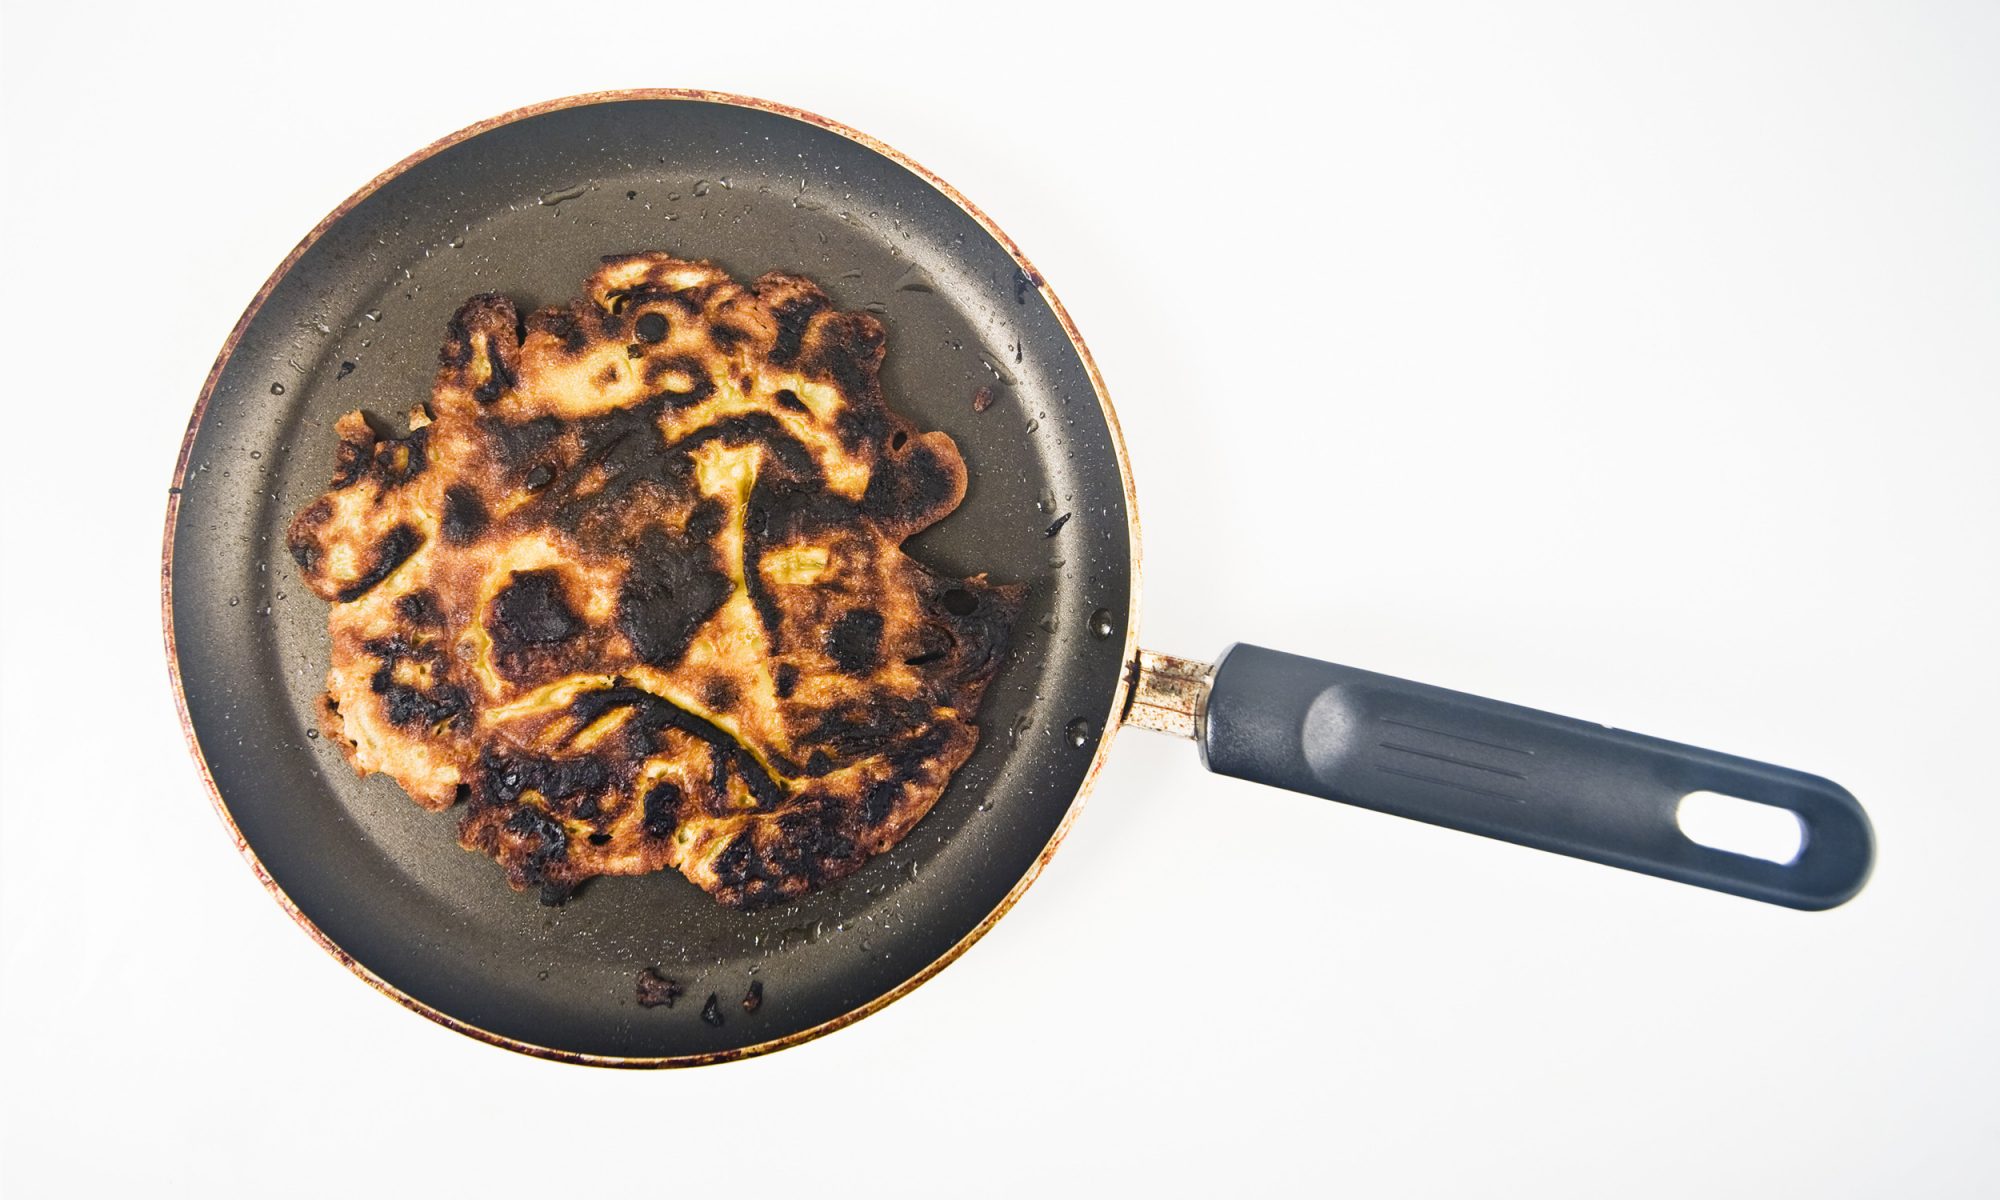 Share 55 kuva pancakes gone wrong